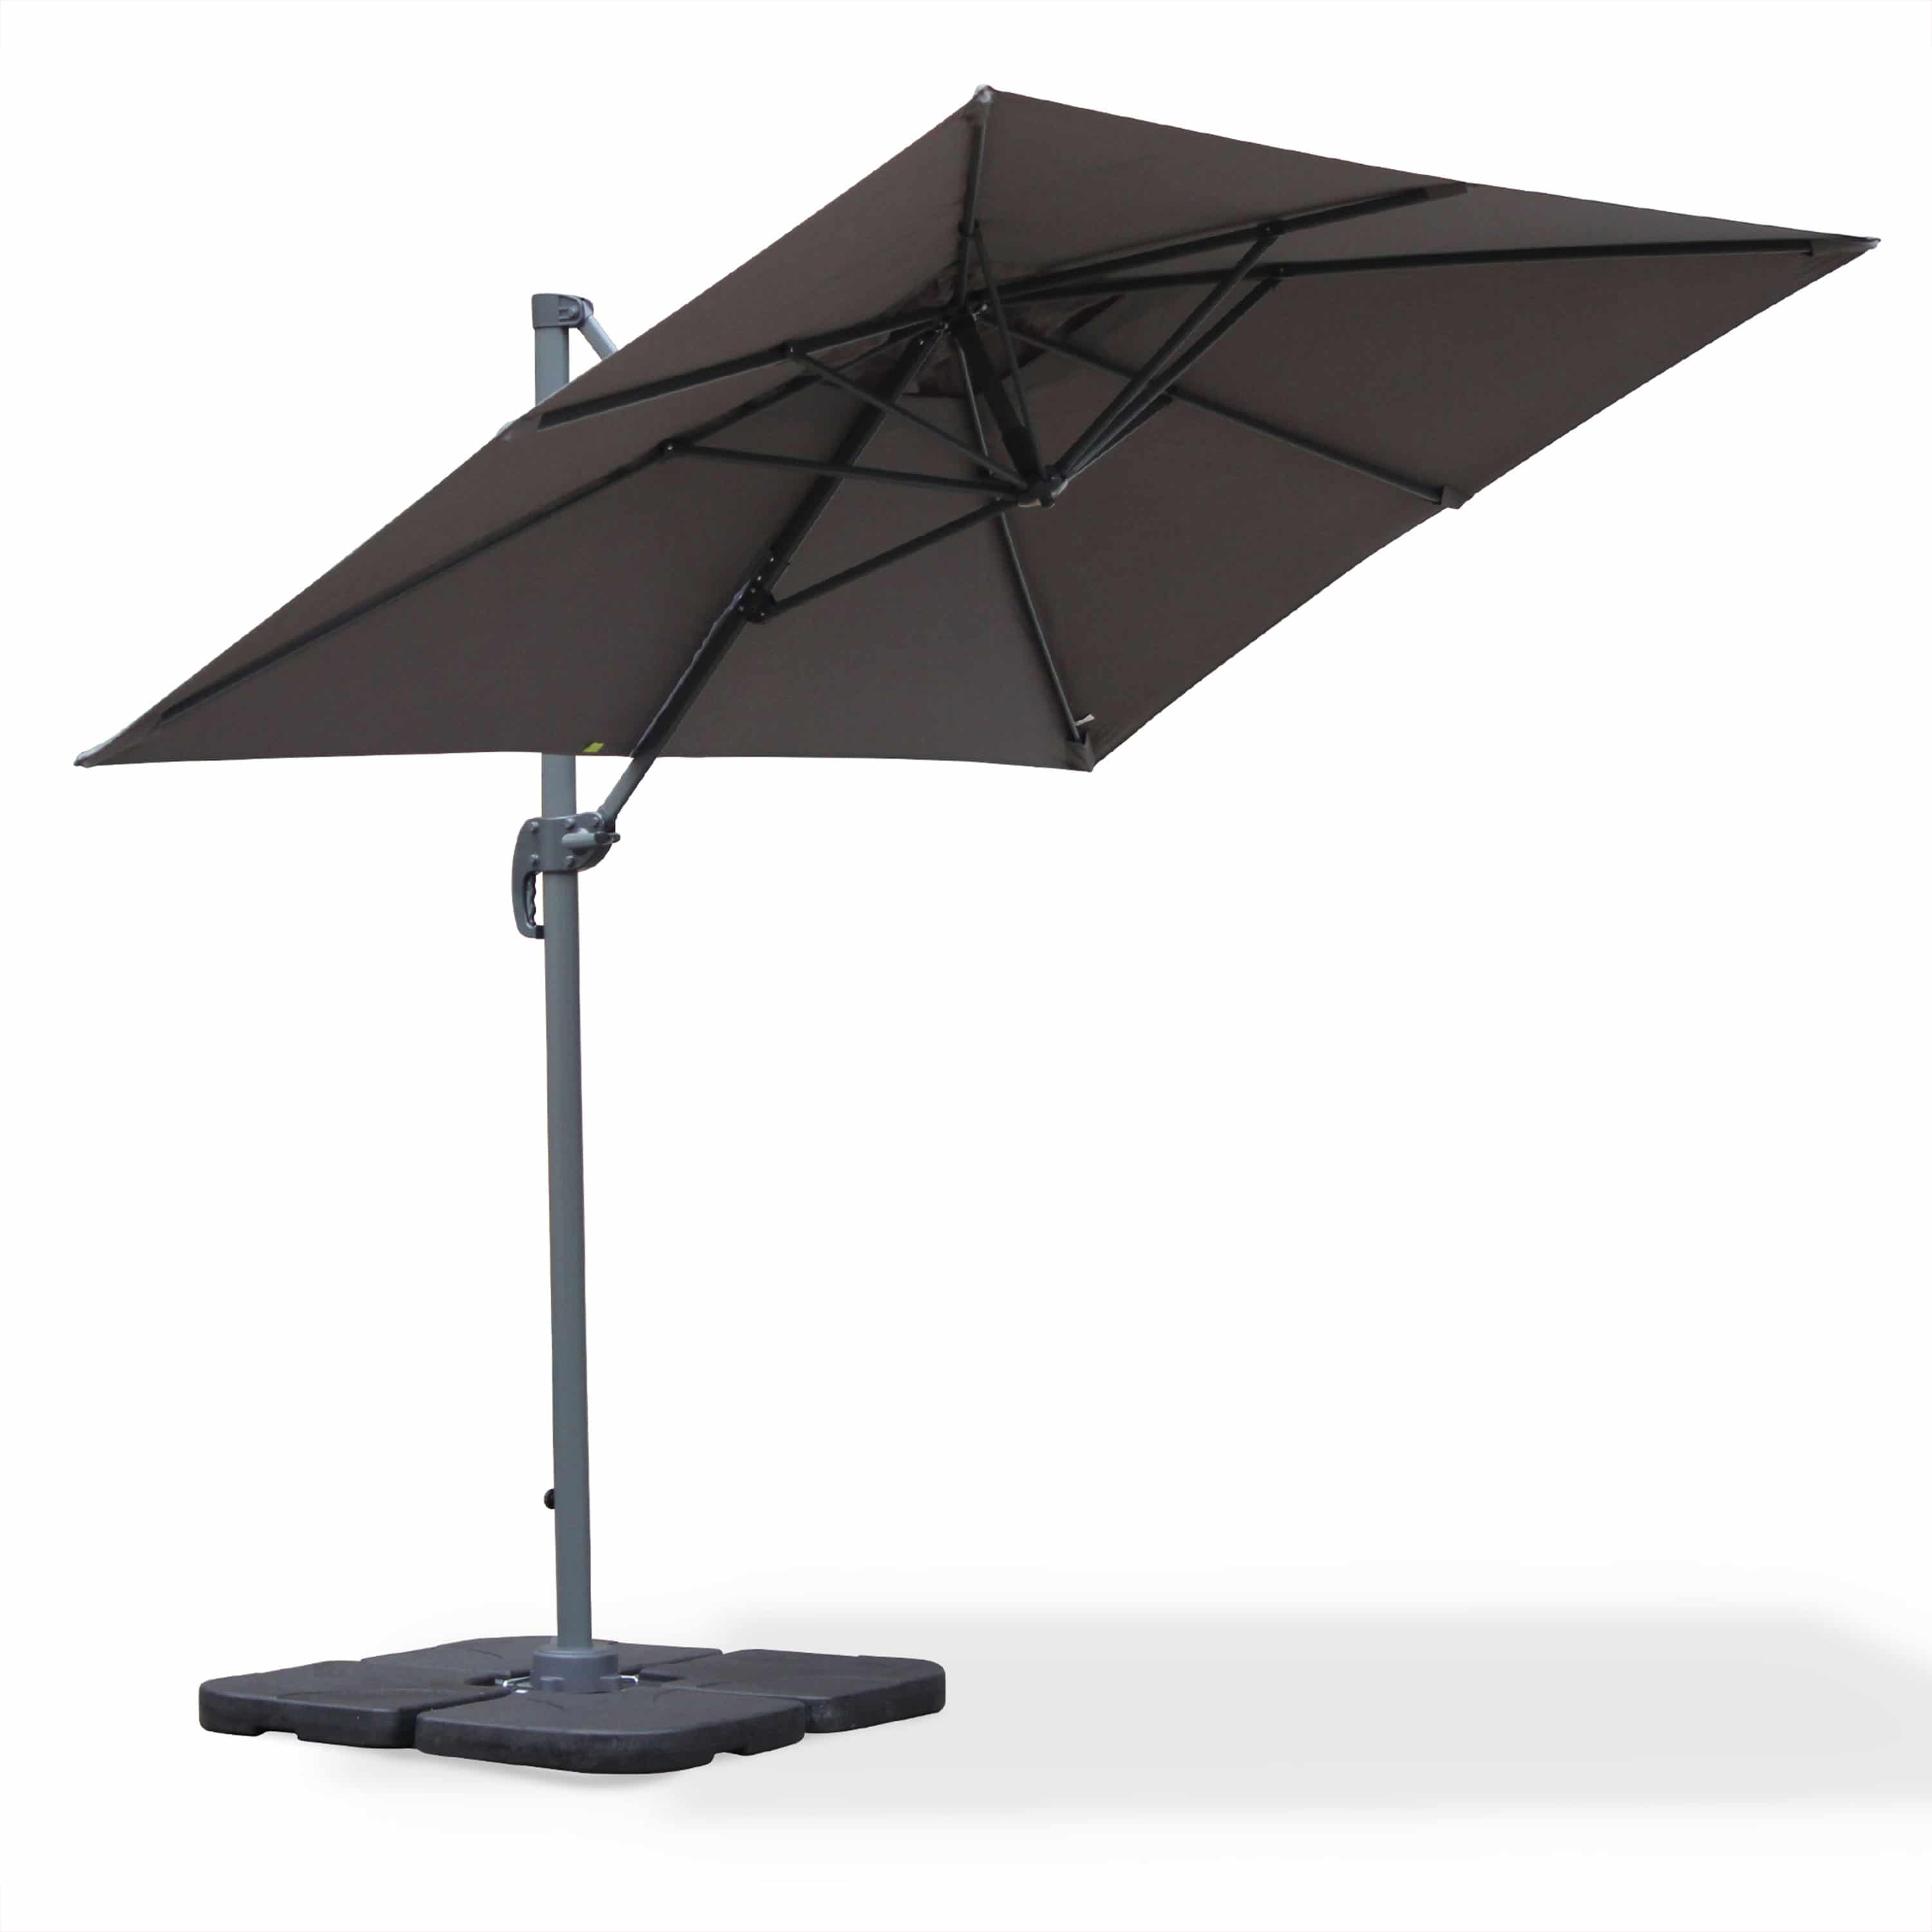 BISCAROSSE 2x3m Aluminium Cantilever Outdoor Umbrella Grey with 360 Rotation Pedal